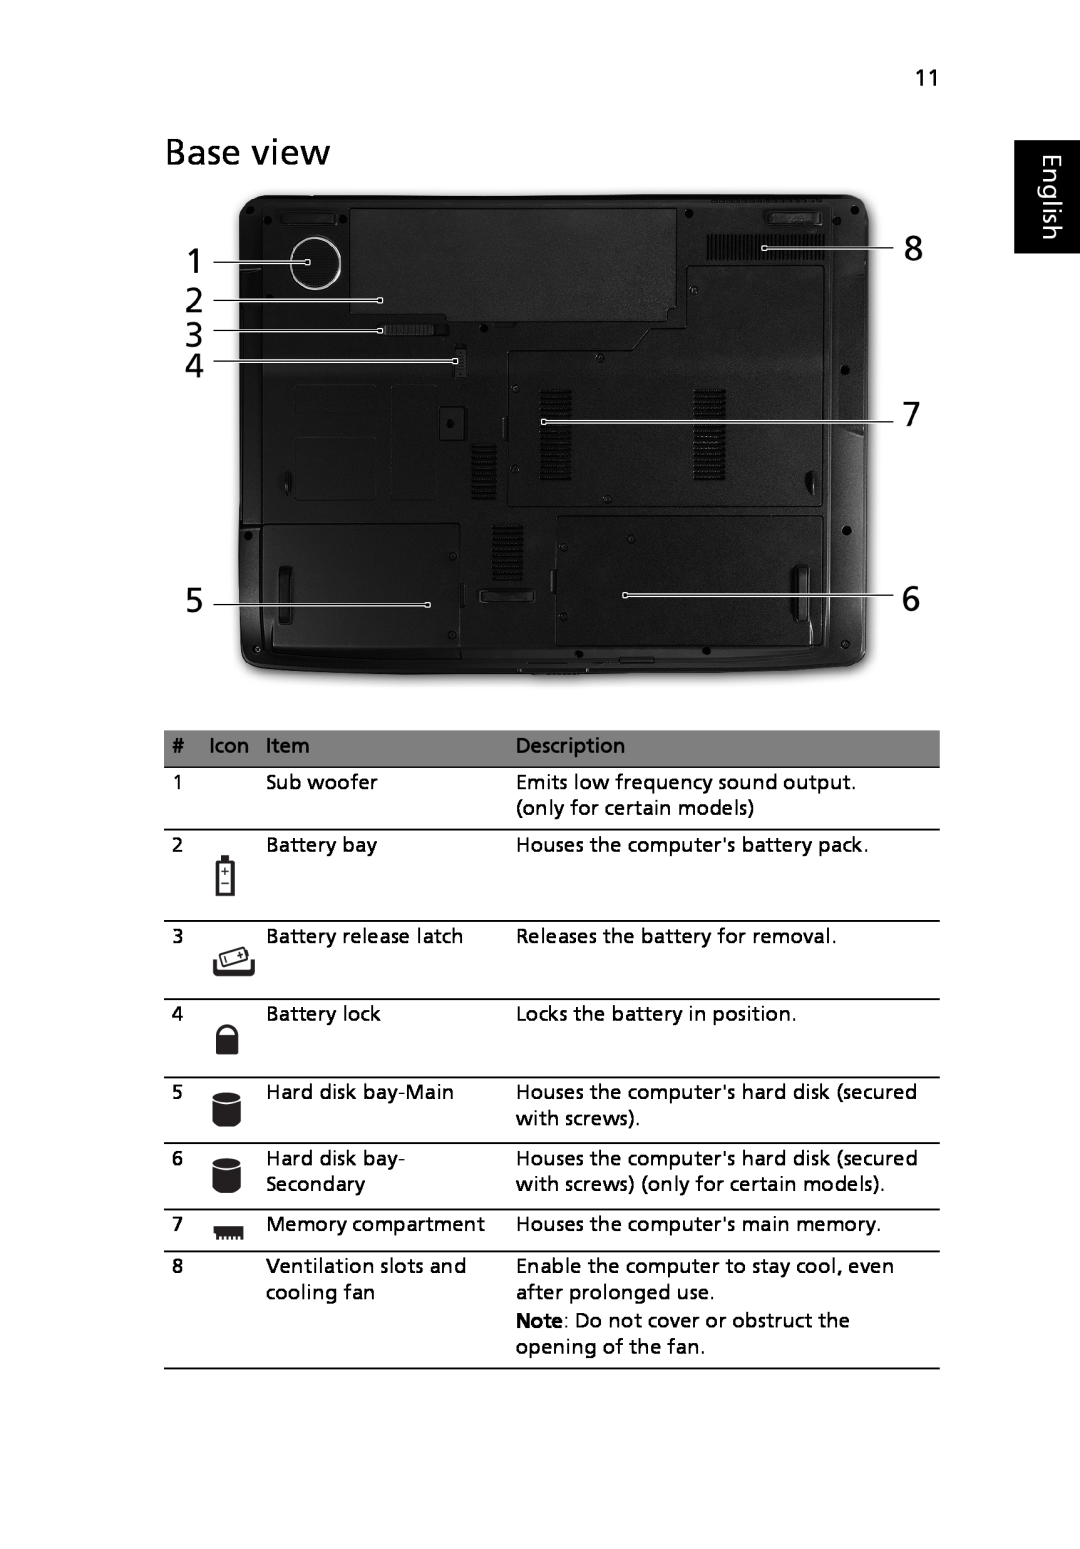 Acer 7530G, ZY5 manual Base view, English, Icon Item, Description 